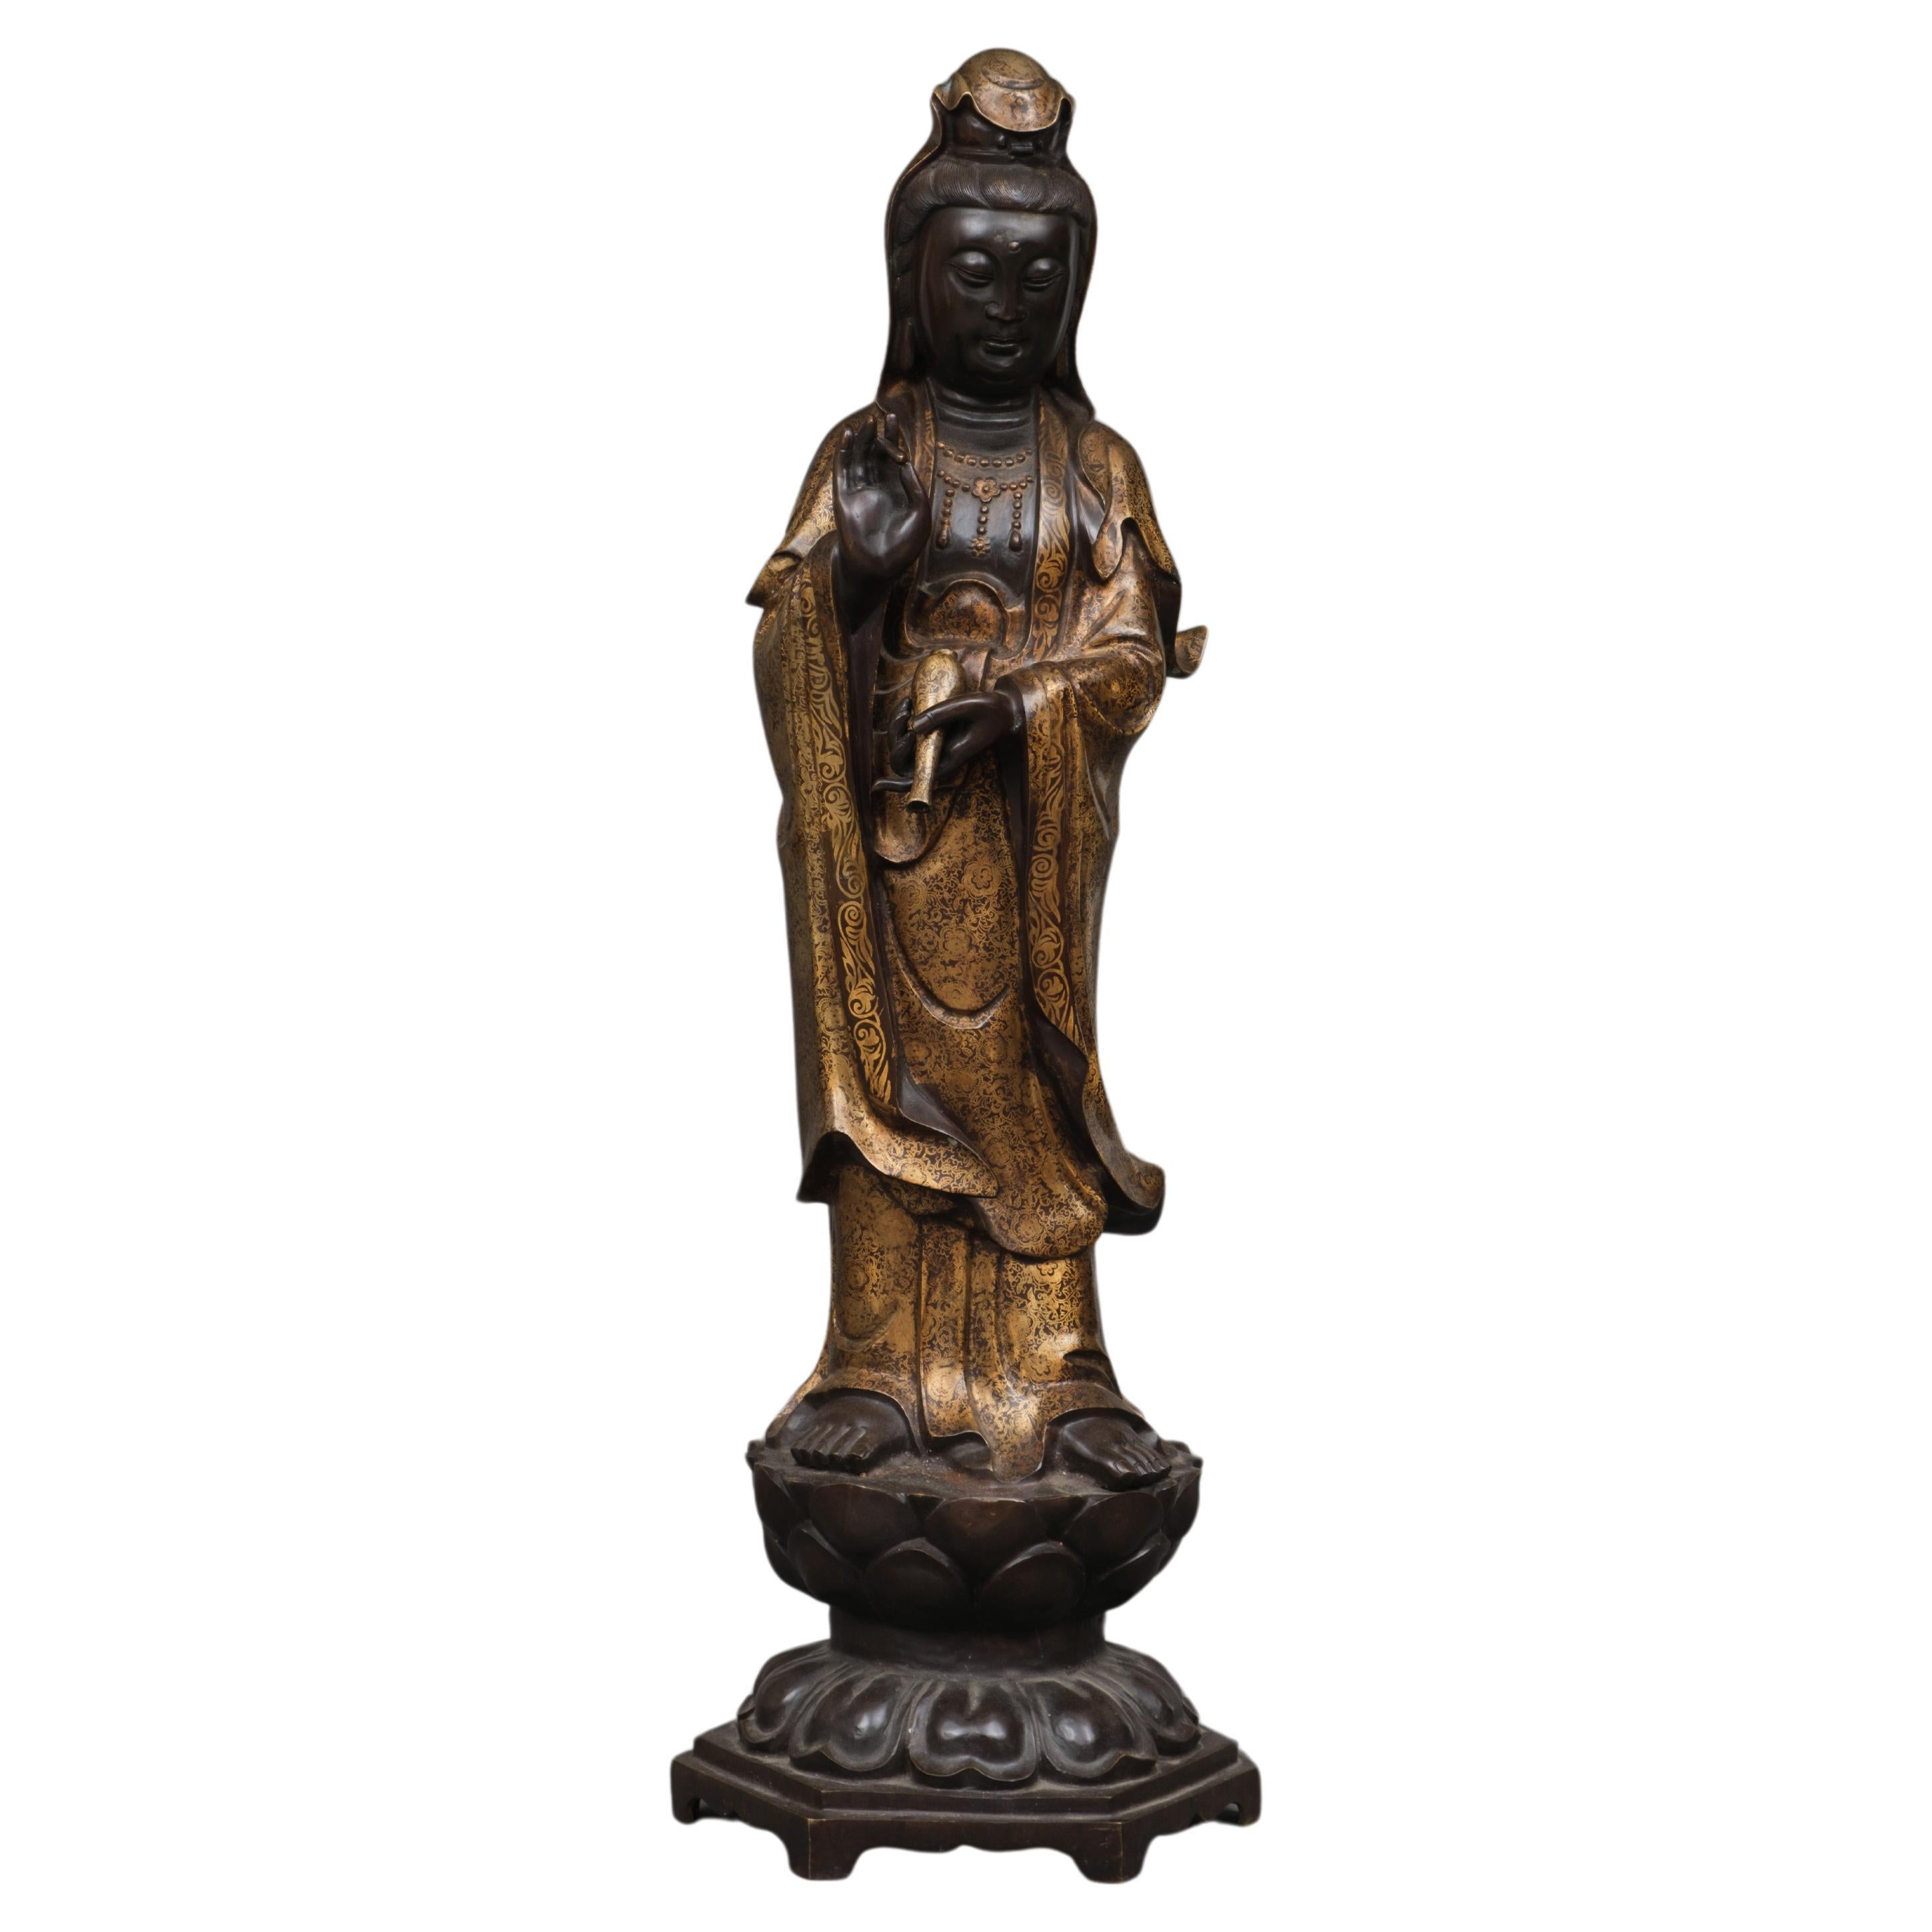 Capital Chinese bronze figure of a standing bodhisattva Guanyin